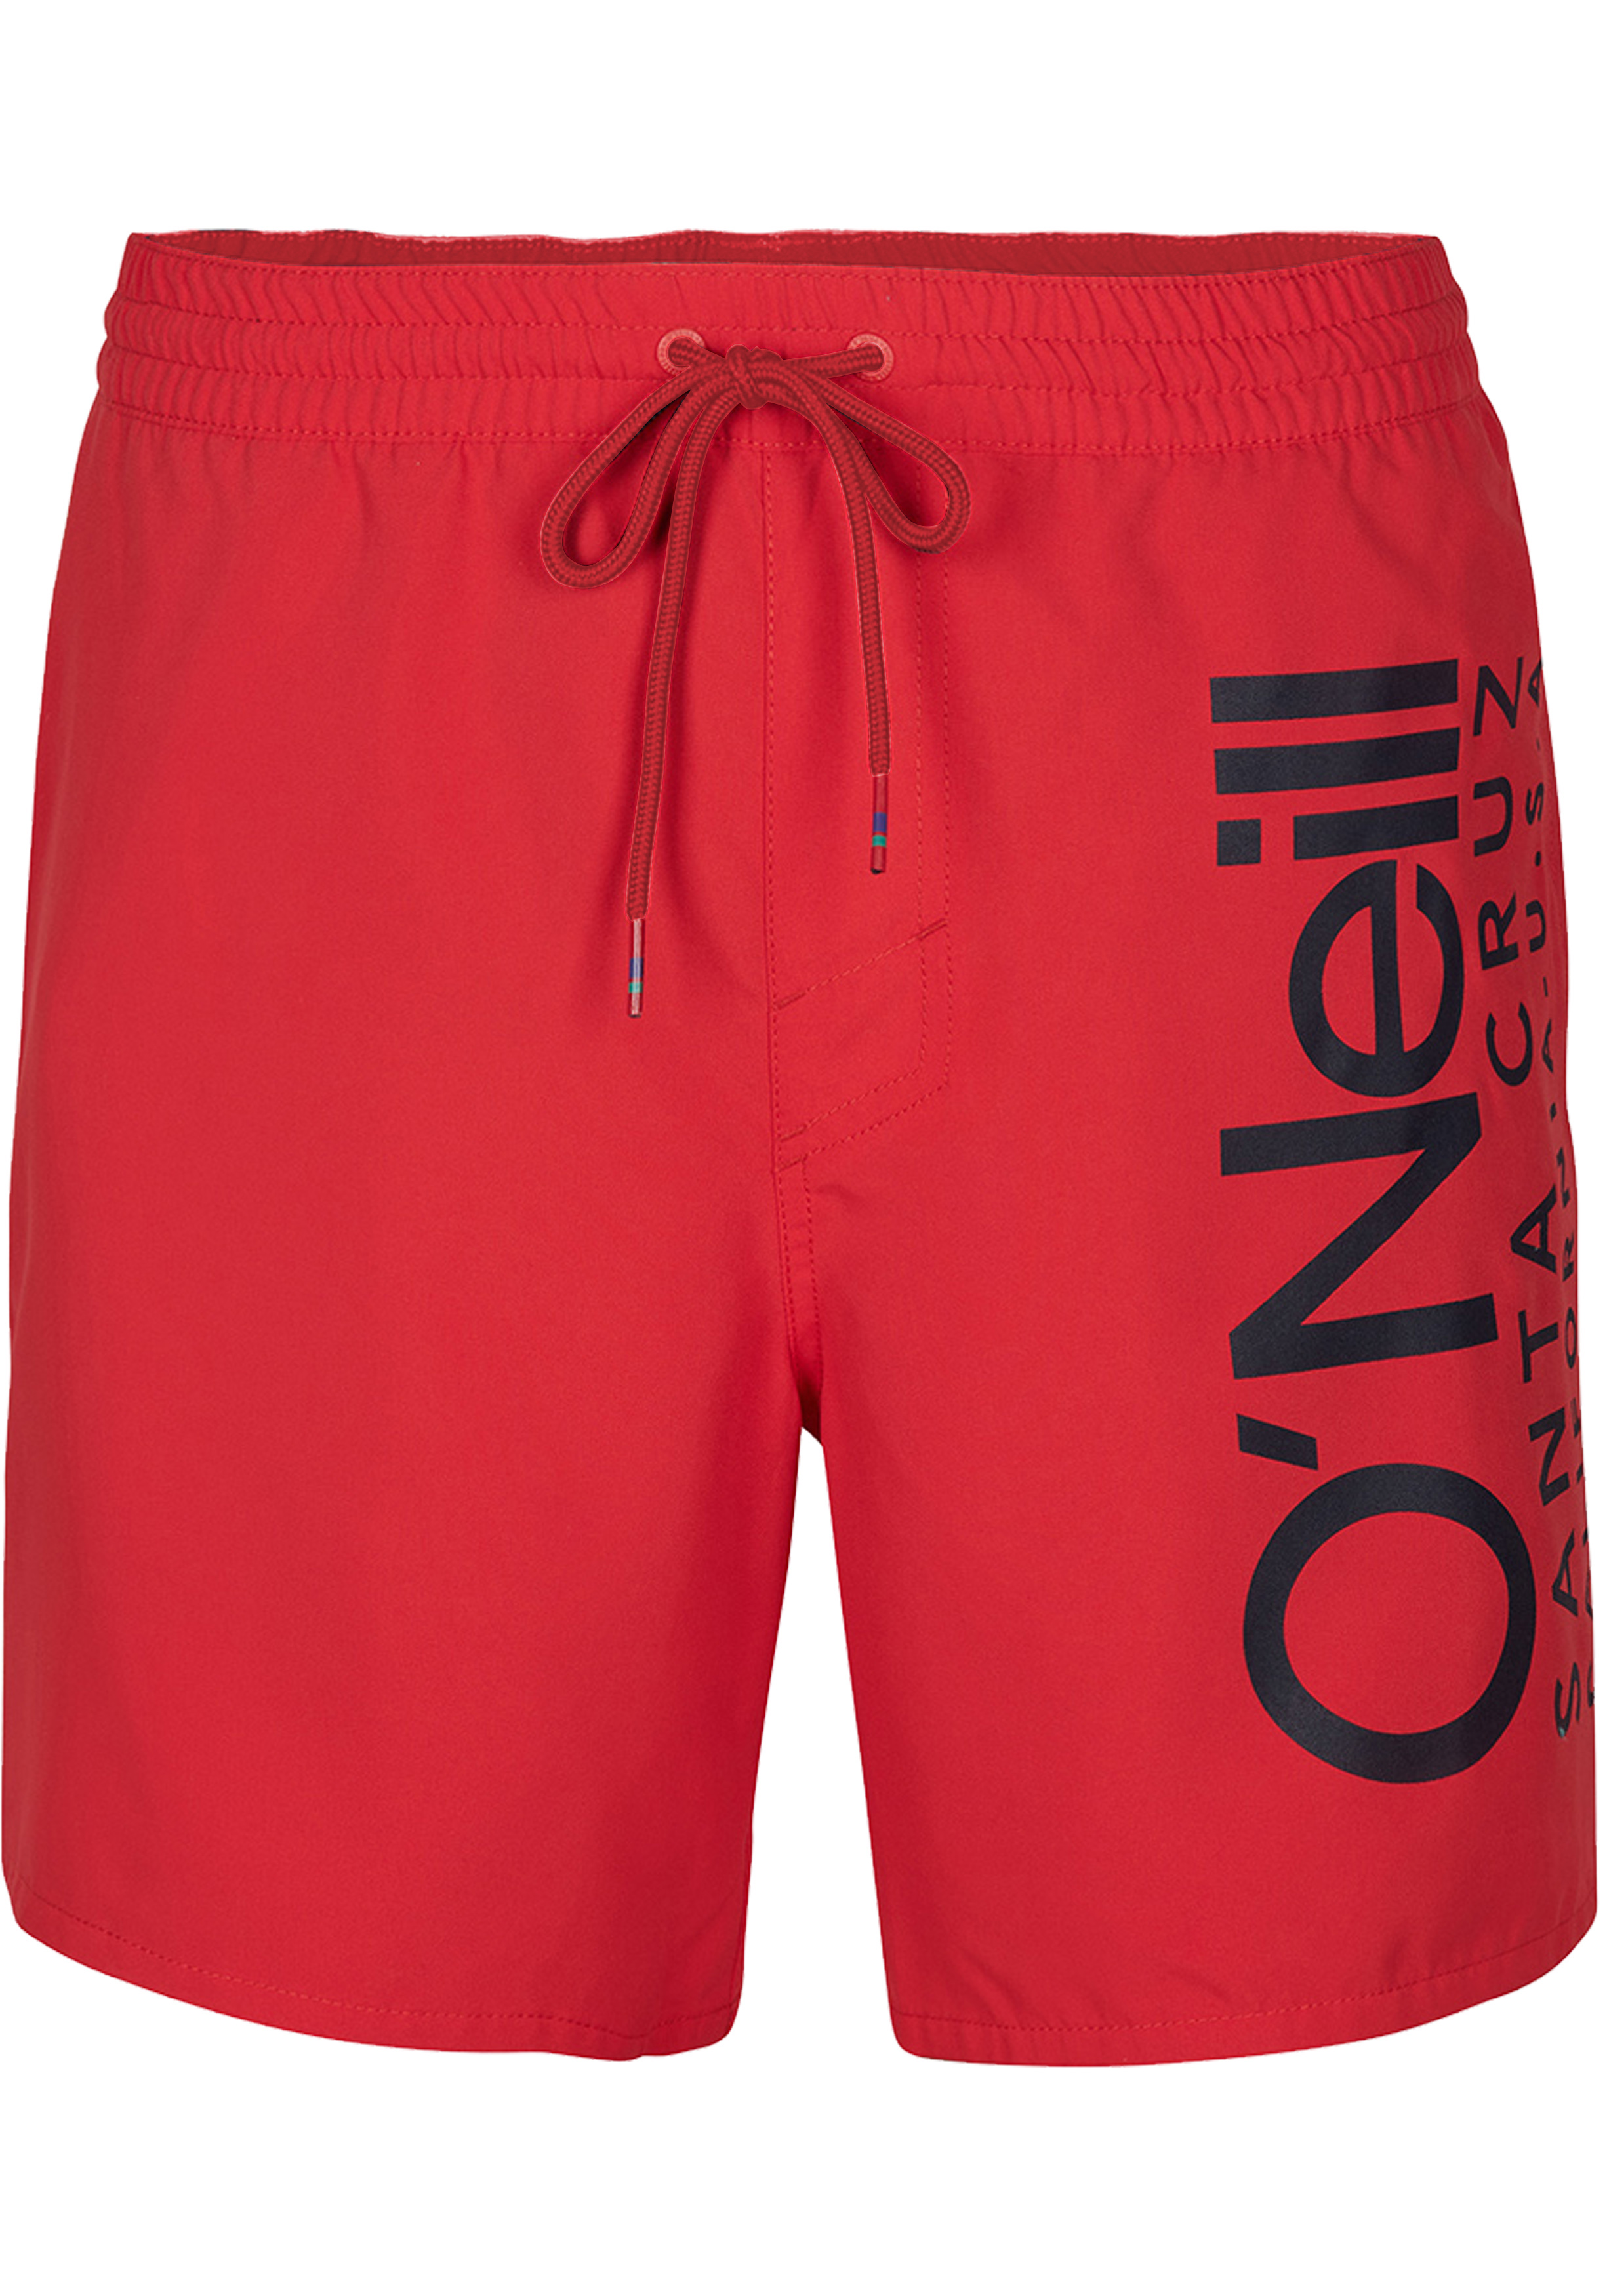 Redding nadering uitbarsting O'Neill heren zwembroek, Original Cali Shorts, rood, Plaid - 20%  Paaskorting op (bijna) alles